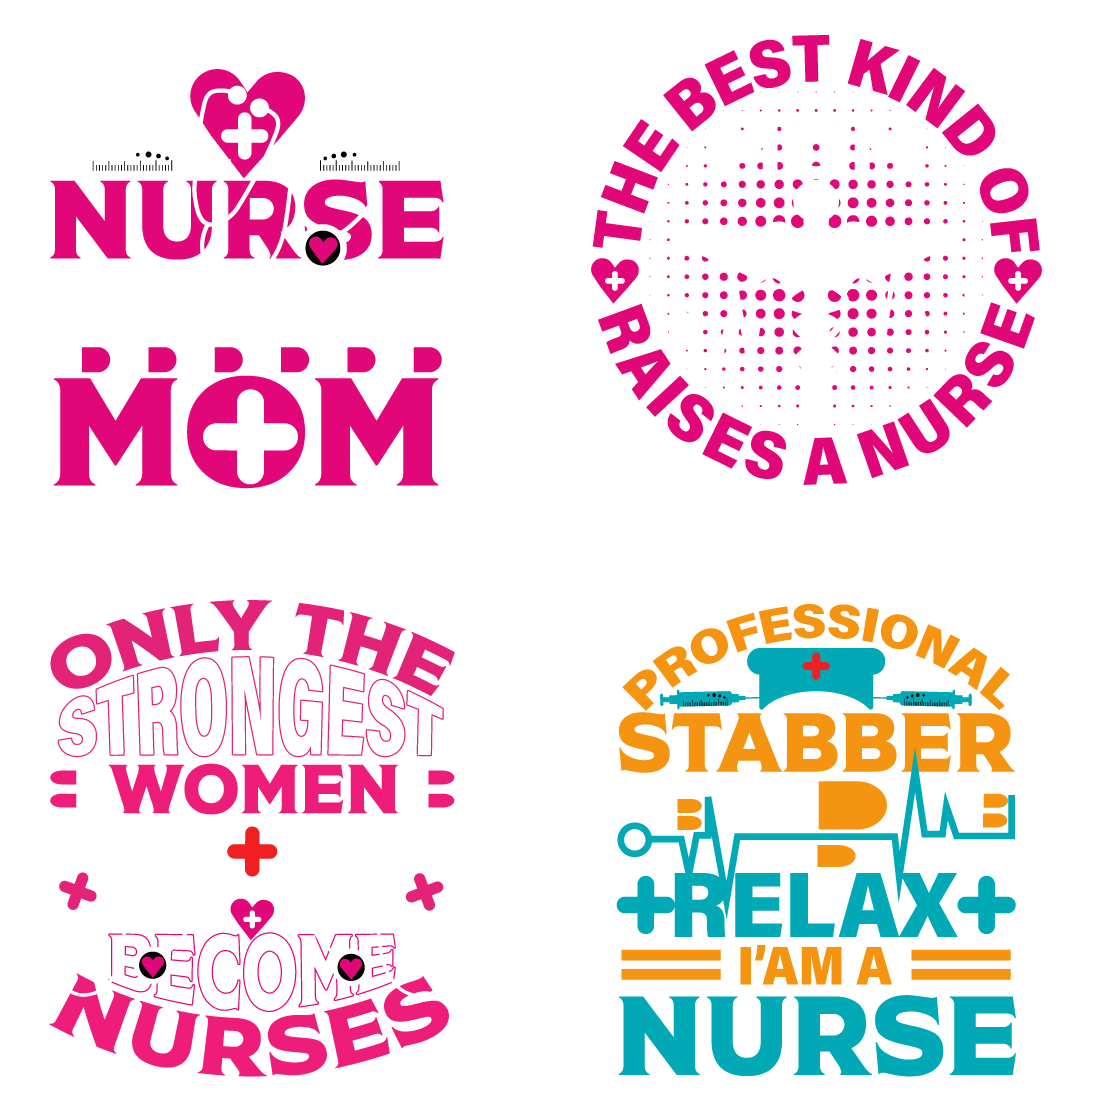 Nurse day design preview image.